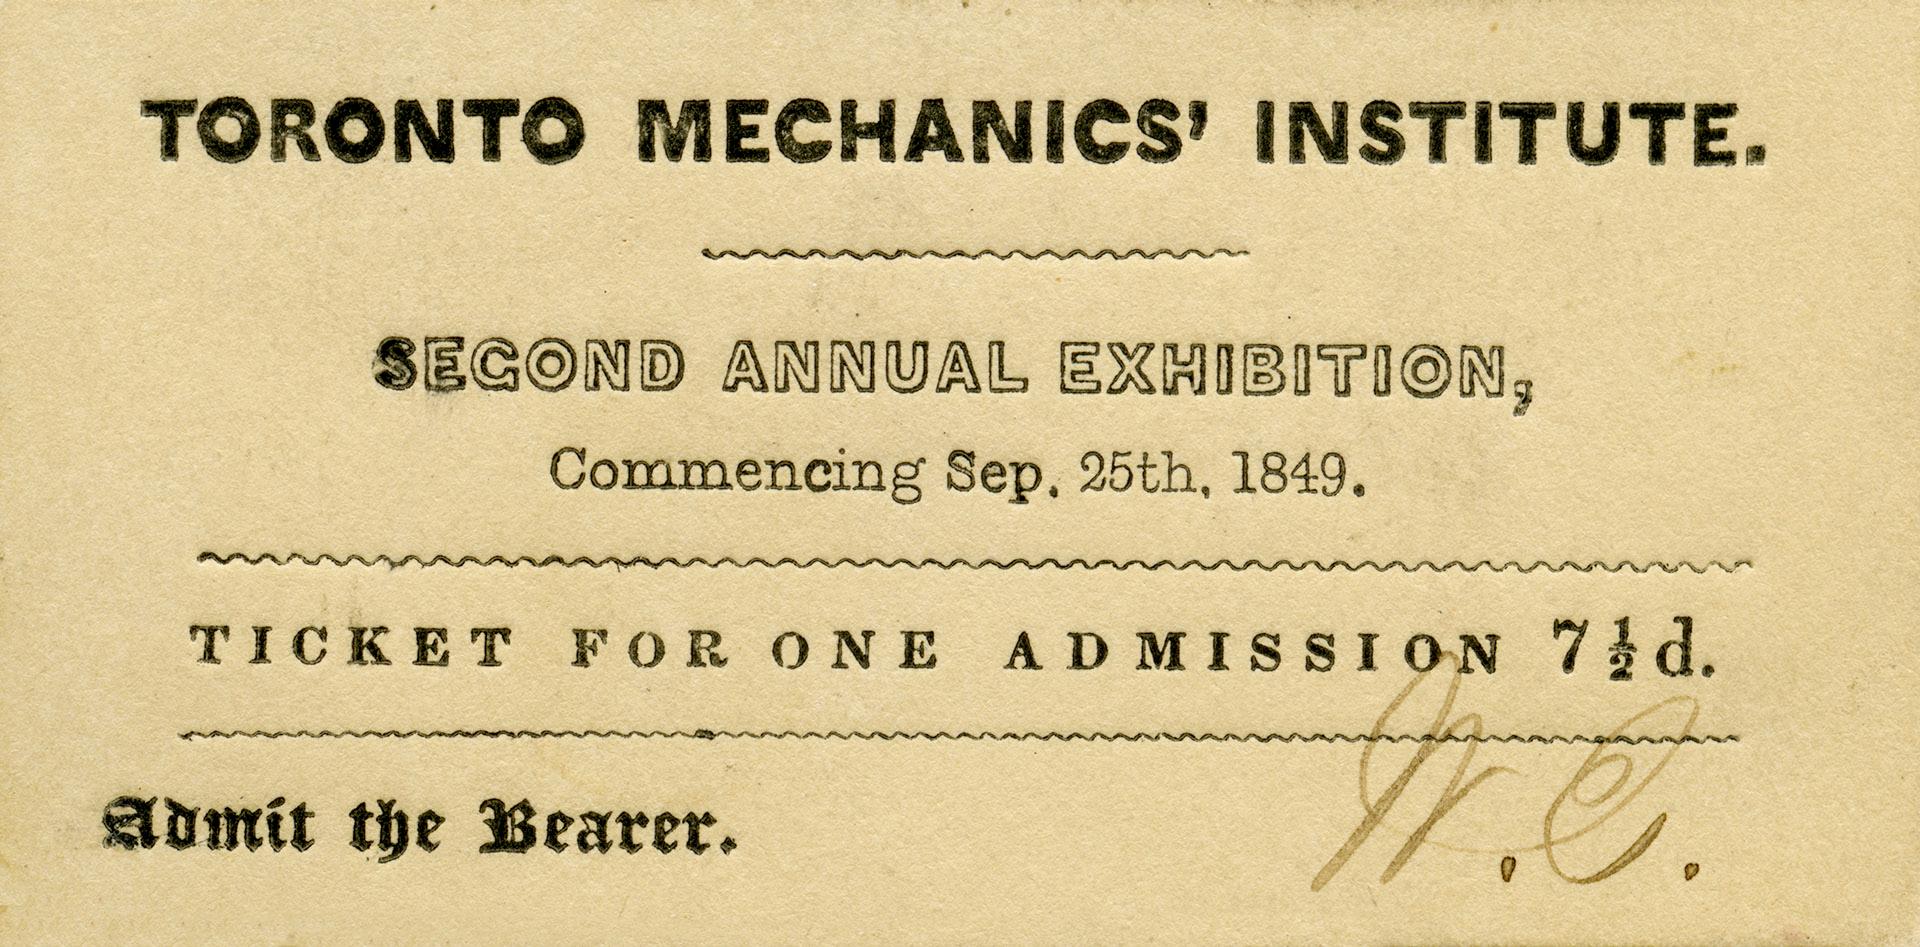 Toronto Mechanics' Institute second annual exhibition, commencing Sep